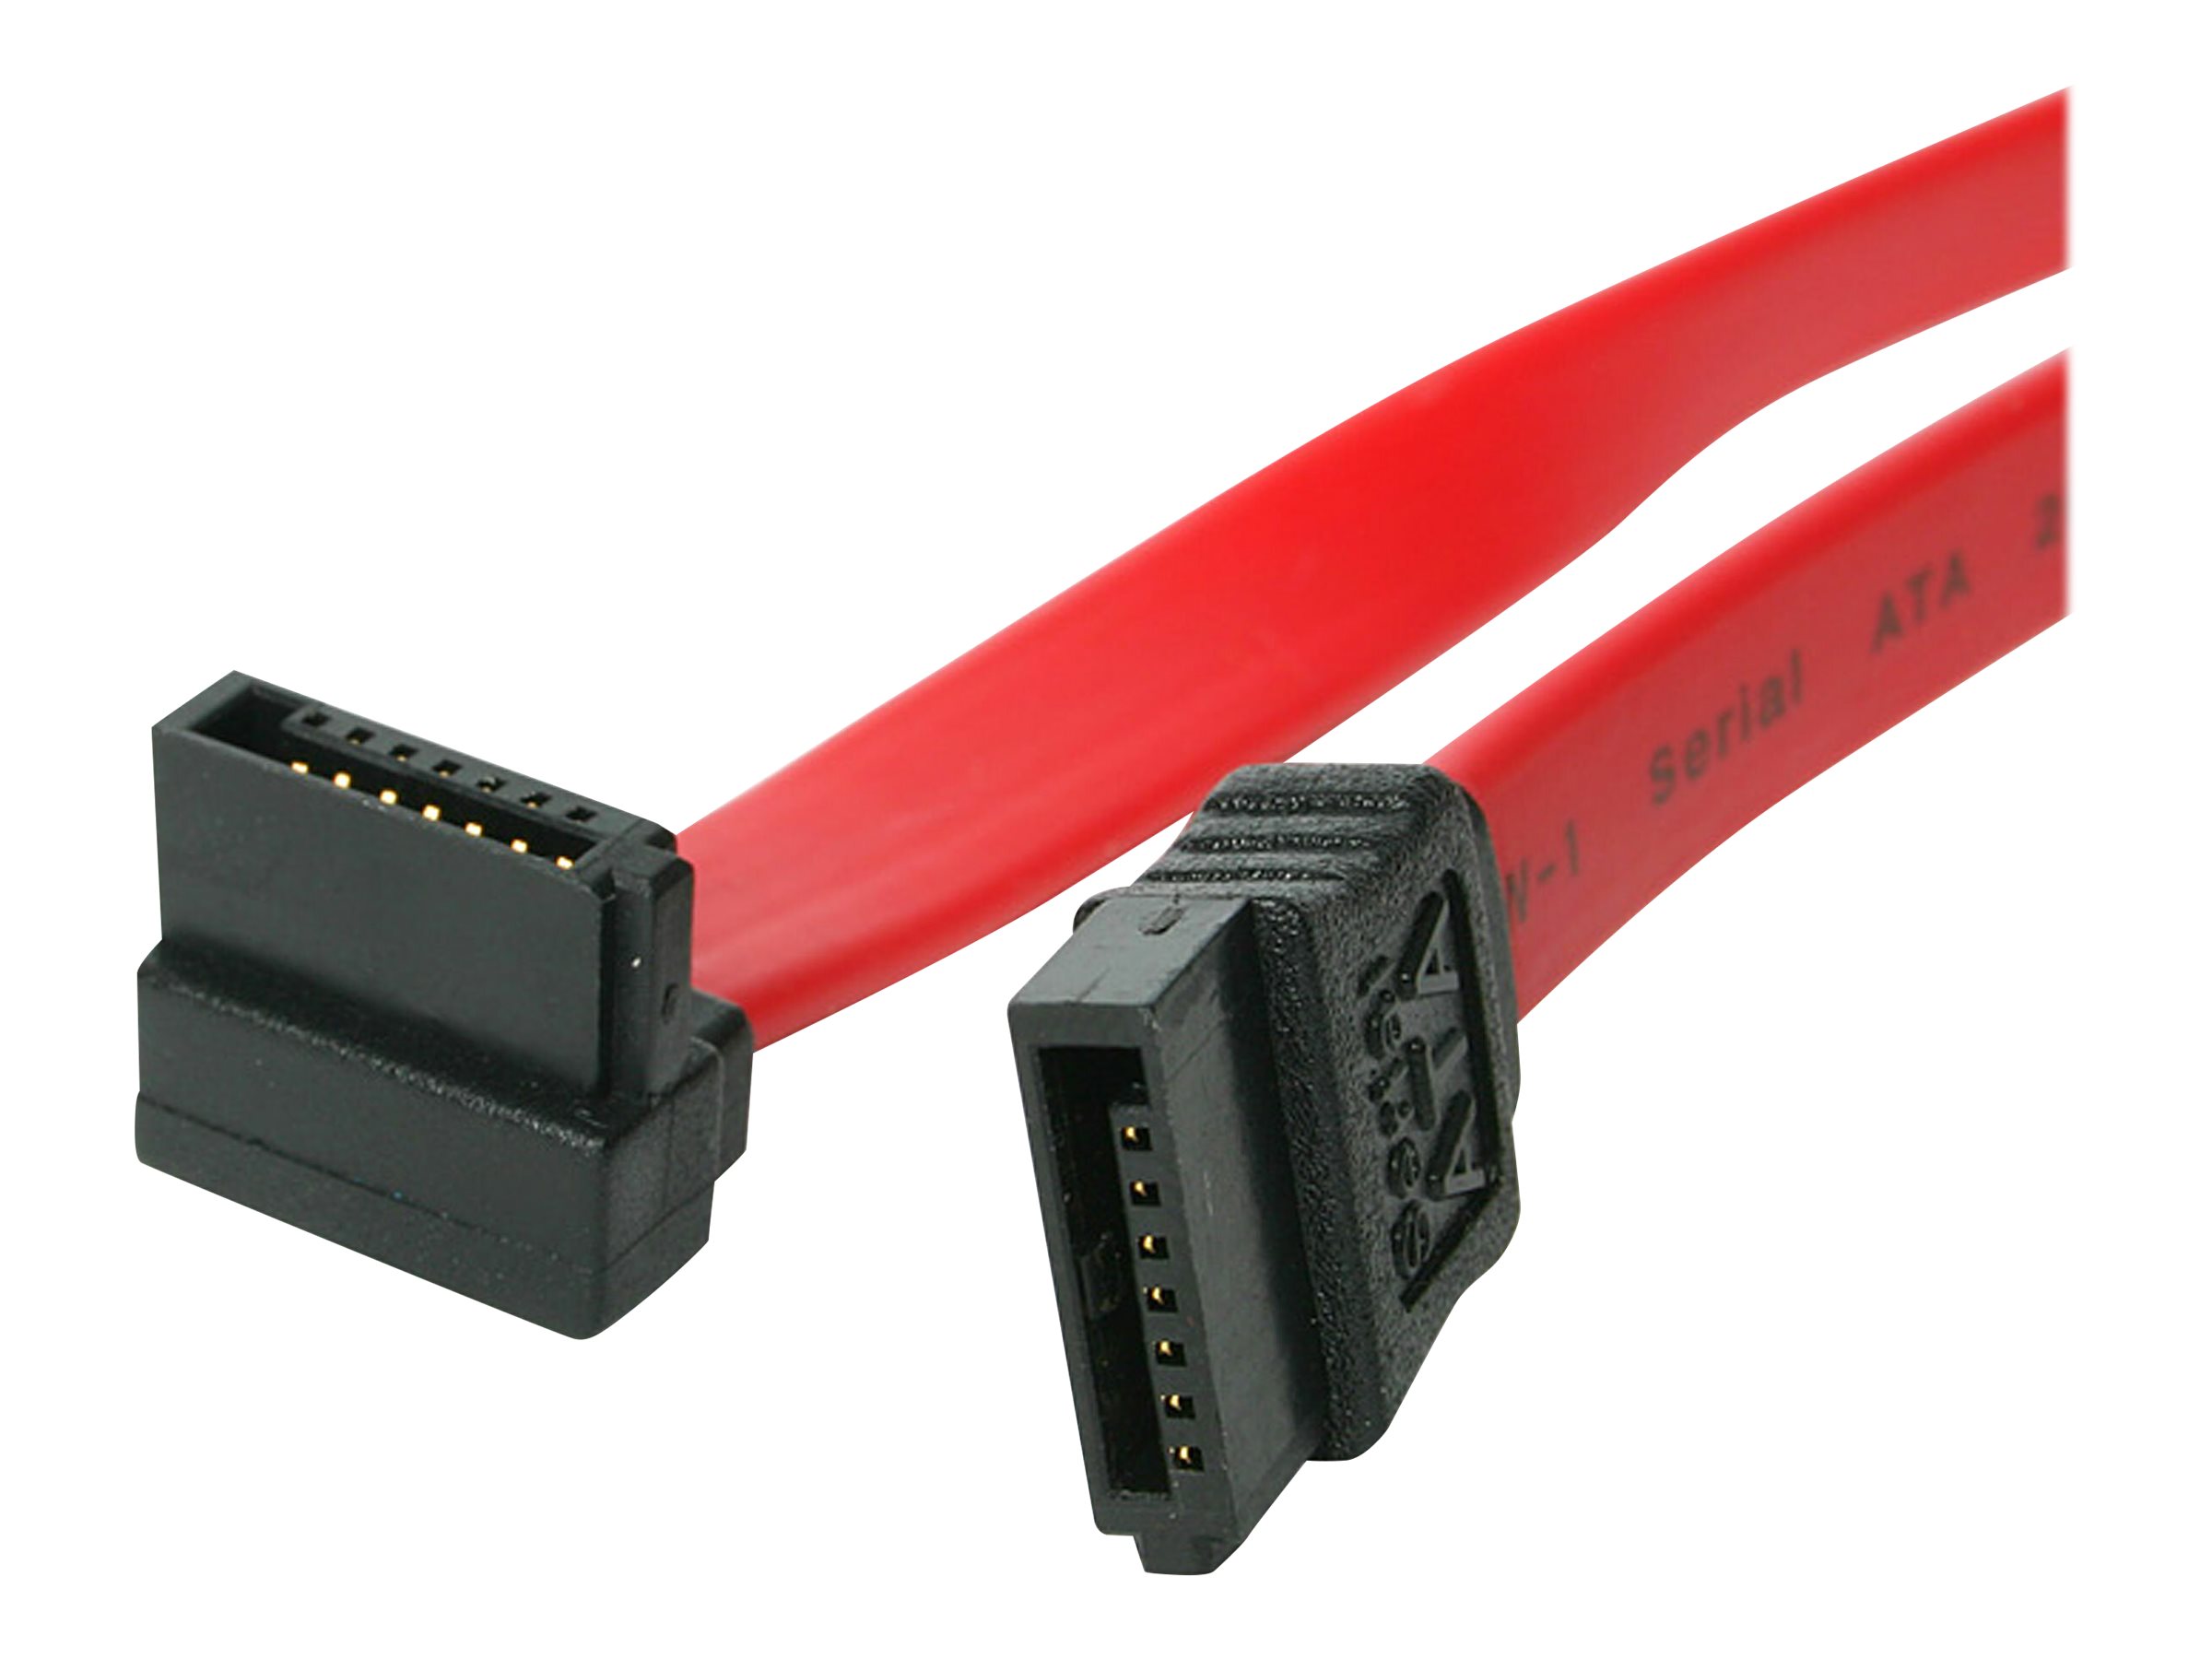 StarTech.com SATA Anschluss Kabel - S-ATA Serial ATA internes Datenkabel - 7 pin Slimline Kabel 45cm - rechts gewinkelt - SATA-Kabel - Serial ATA 150/300/600 - SATA (R)